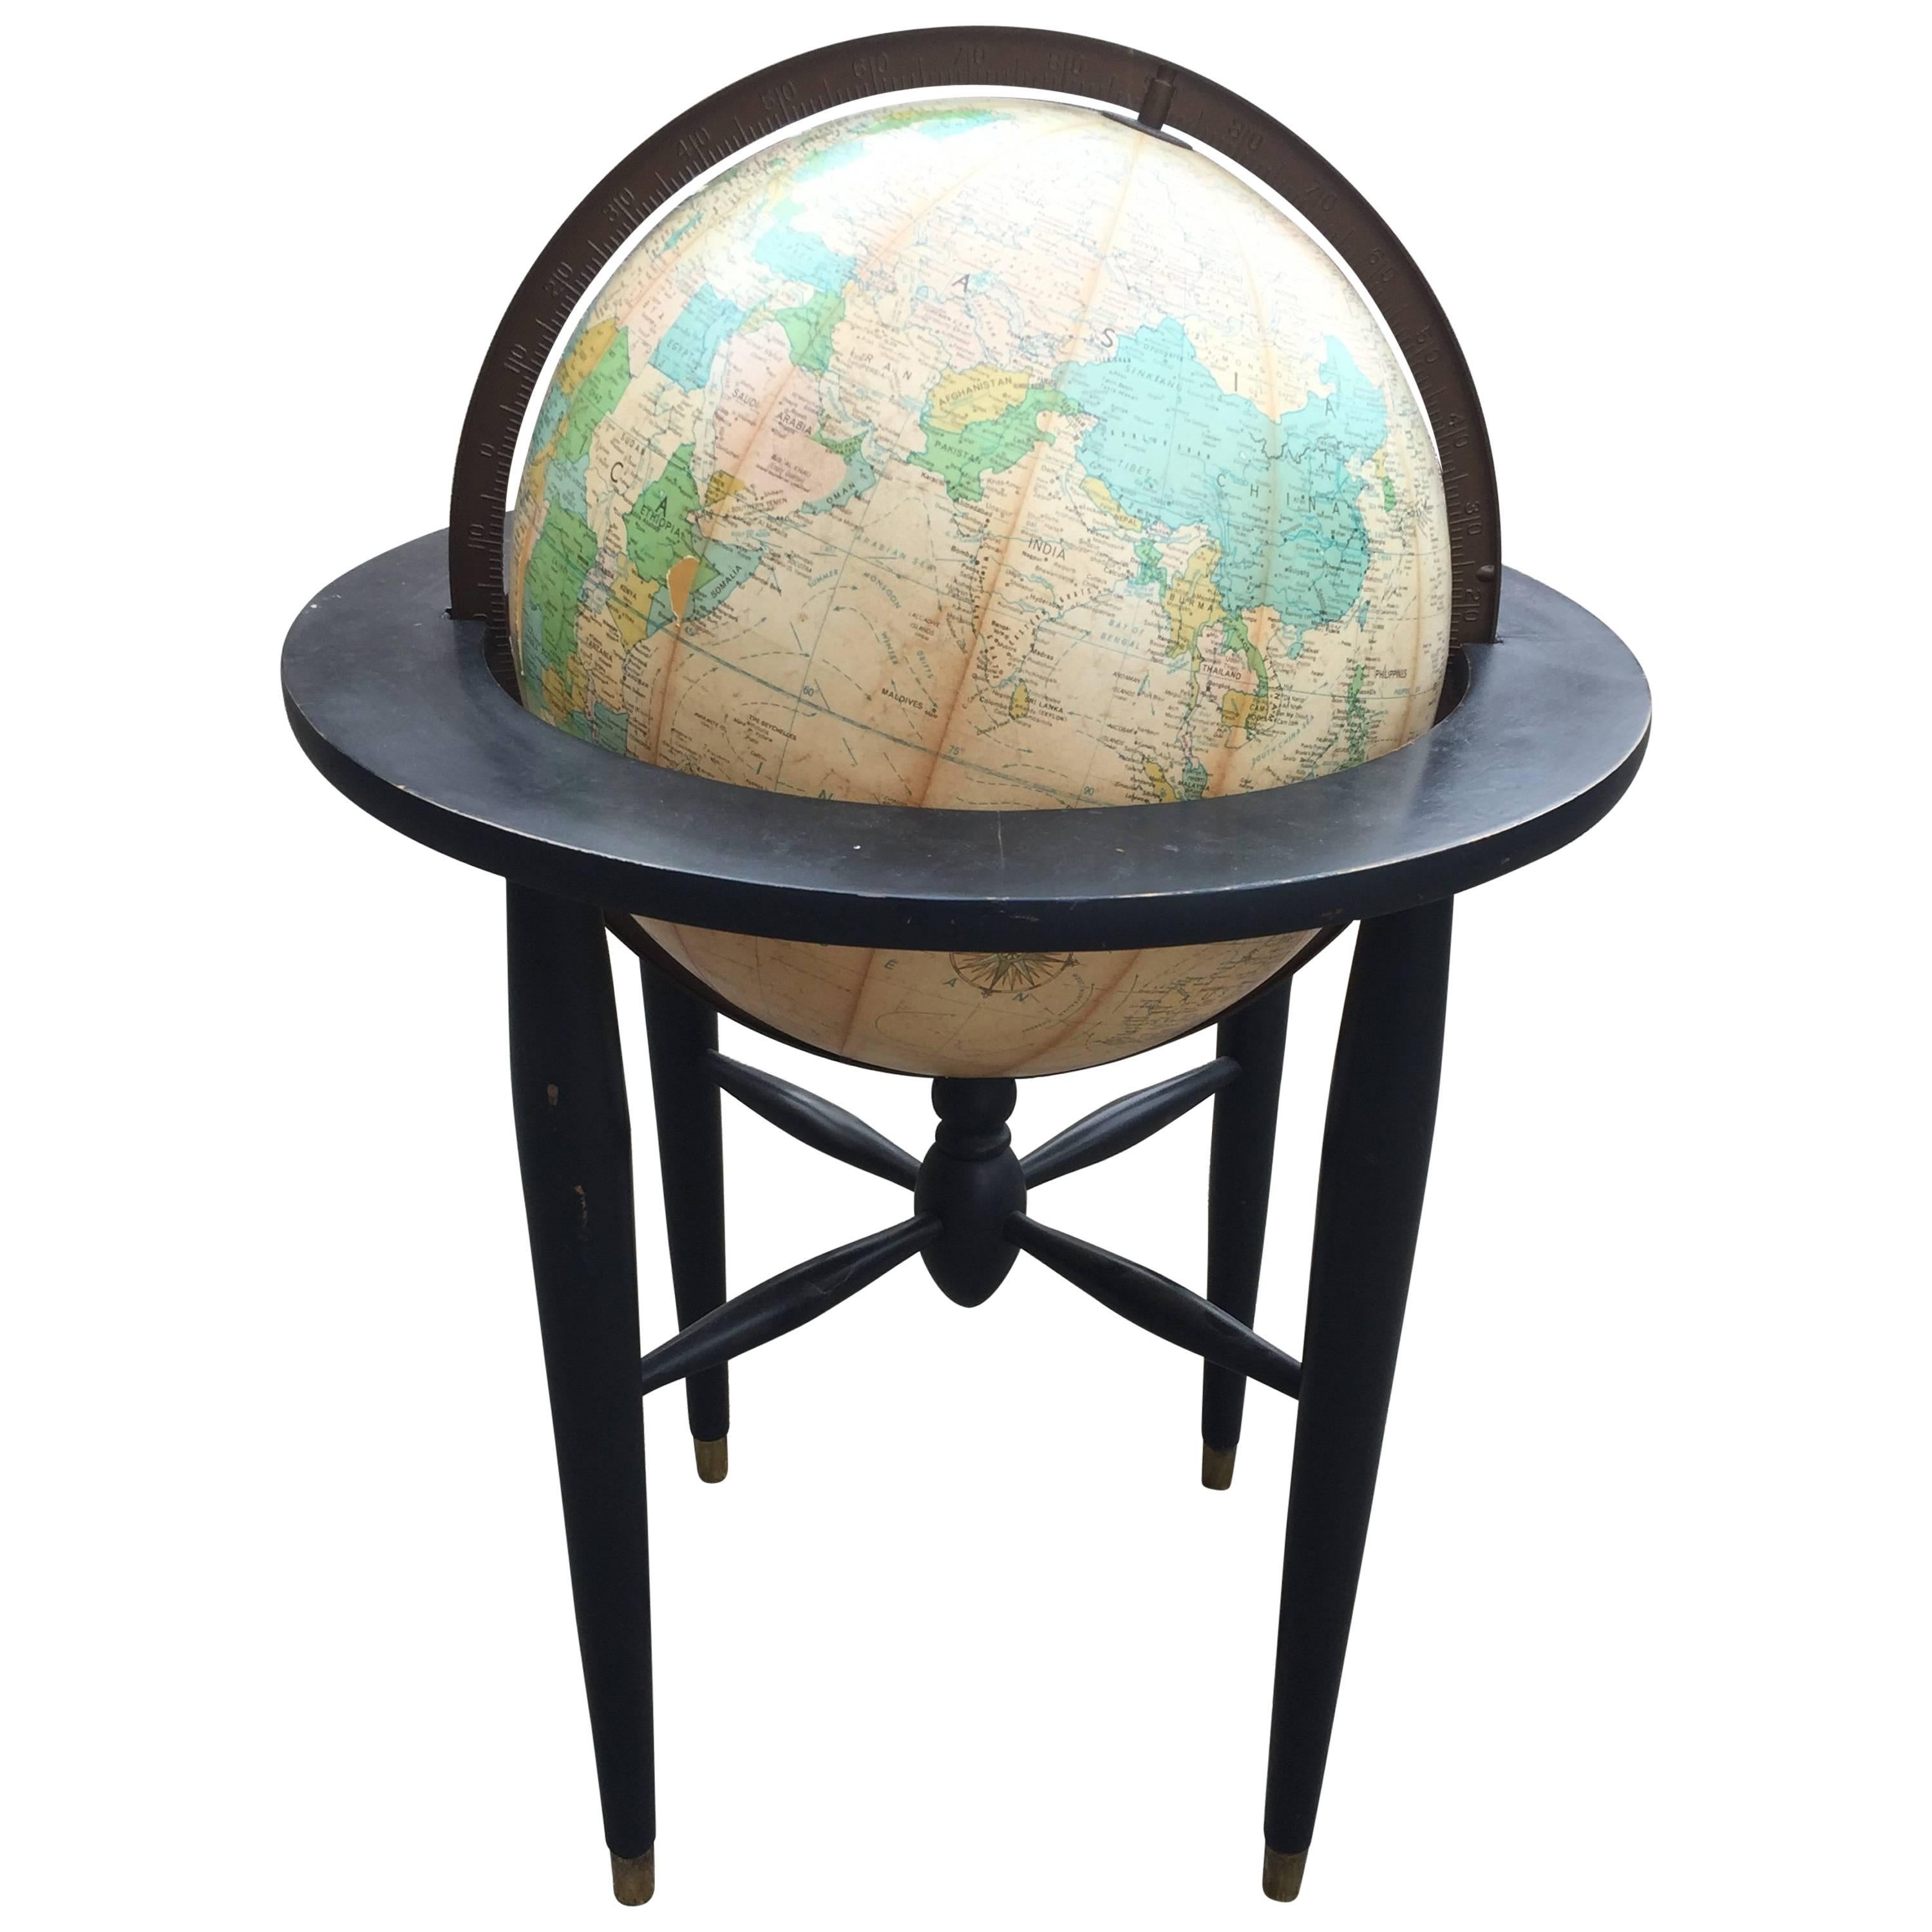 Illuminated Globe For Sale